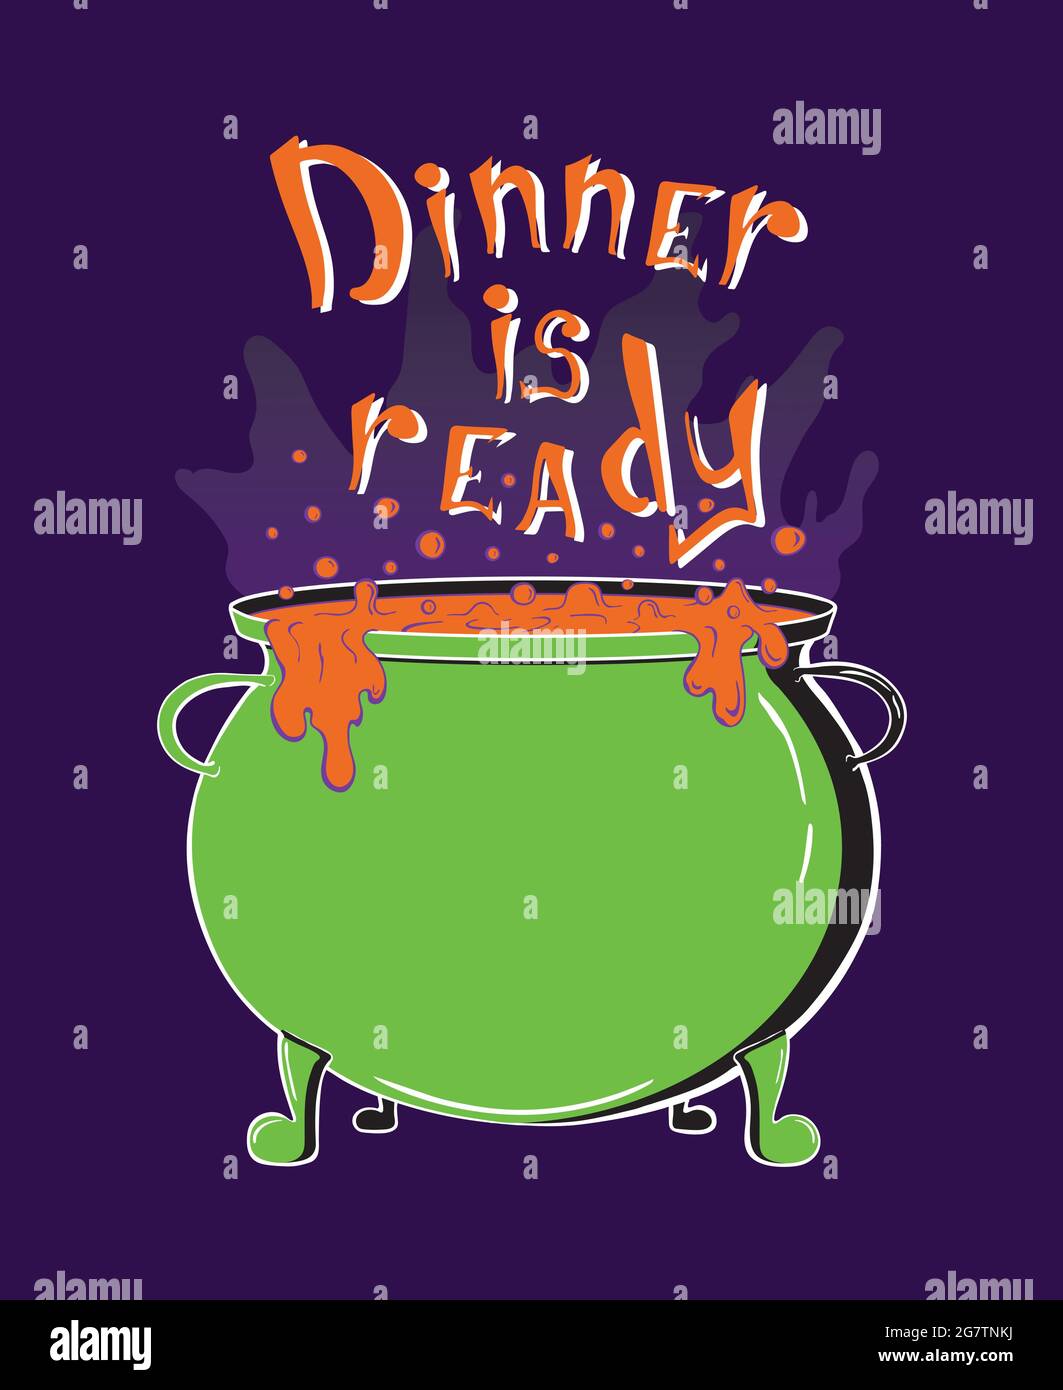 Dinner is ready sticker for halloween design Stock Vector